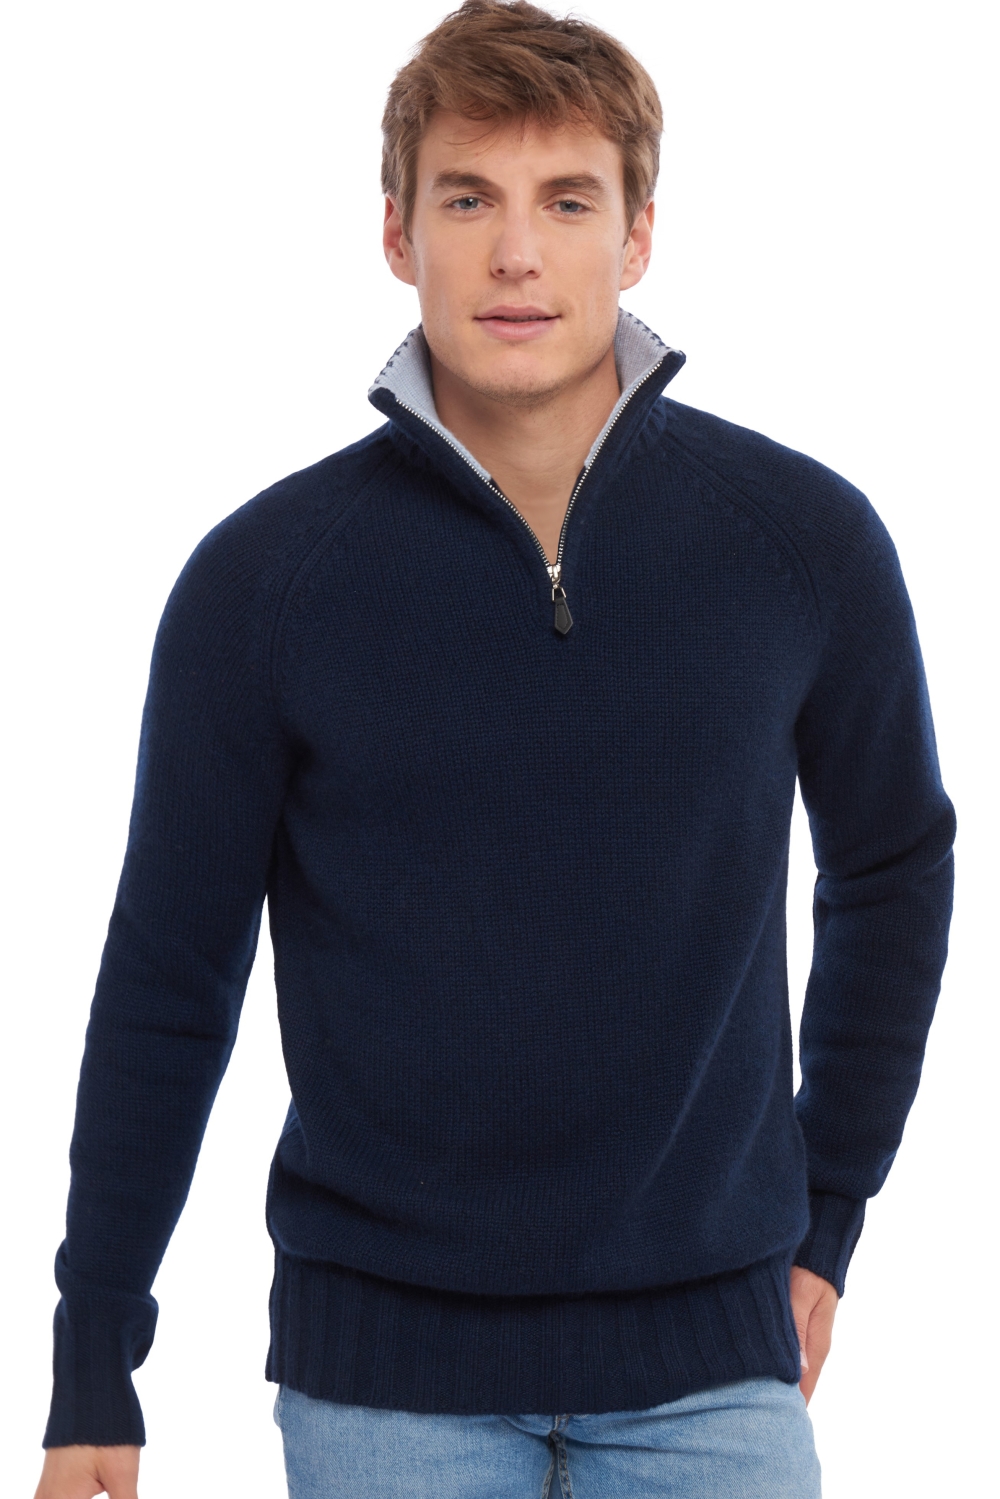 Cashmere men chunky sweater olivier dress blue bayou 2xl